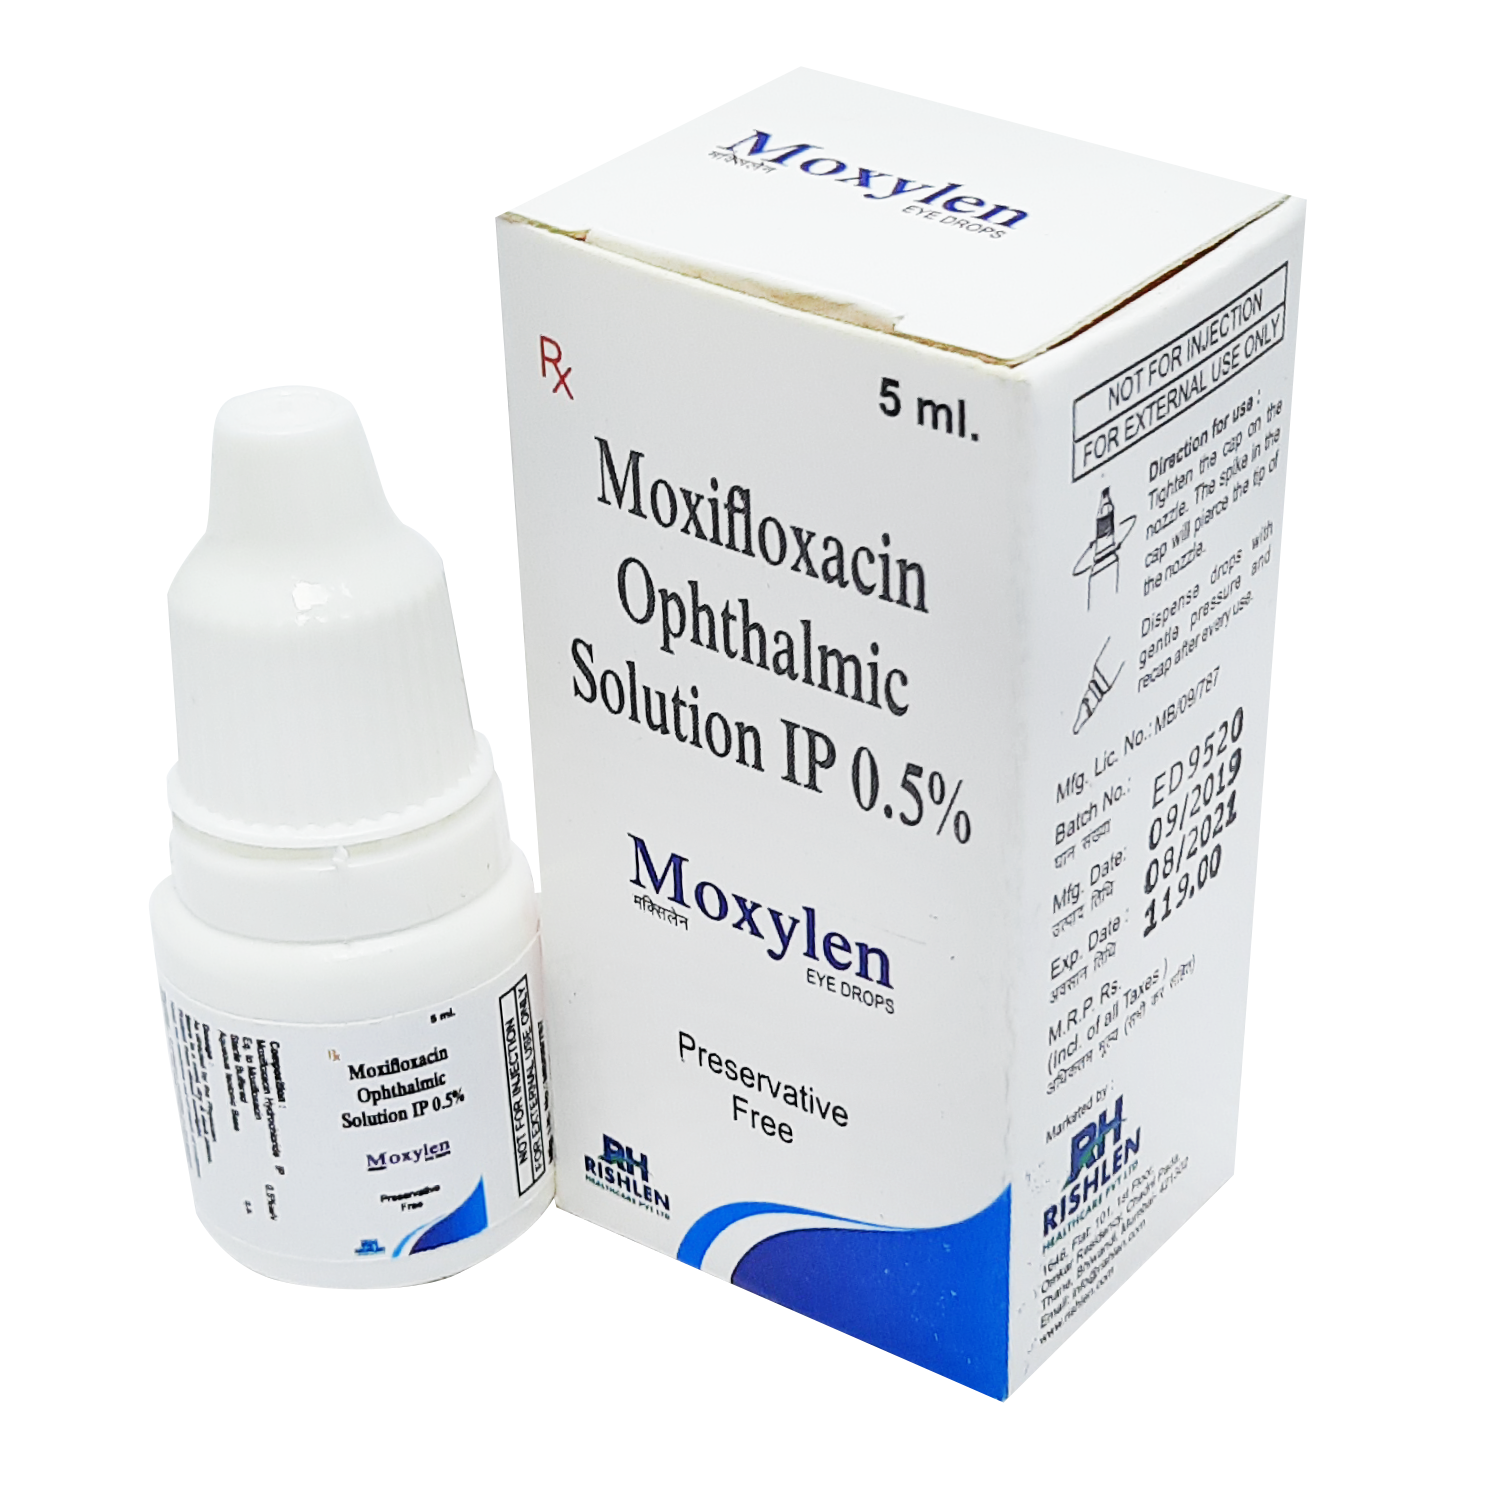 MOXYLEN 5ML, Moxifloxacin 0.5% w/v Moxilen, Moxylen, Moxylan, Moxifloxacin, Prednisolone & Loteprednol Ethabonate Opthalmic Suspension